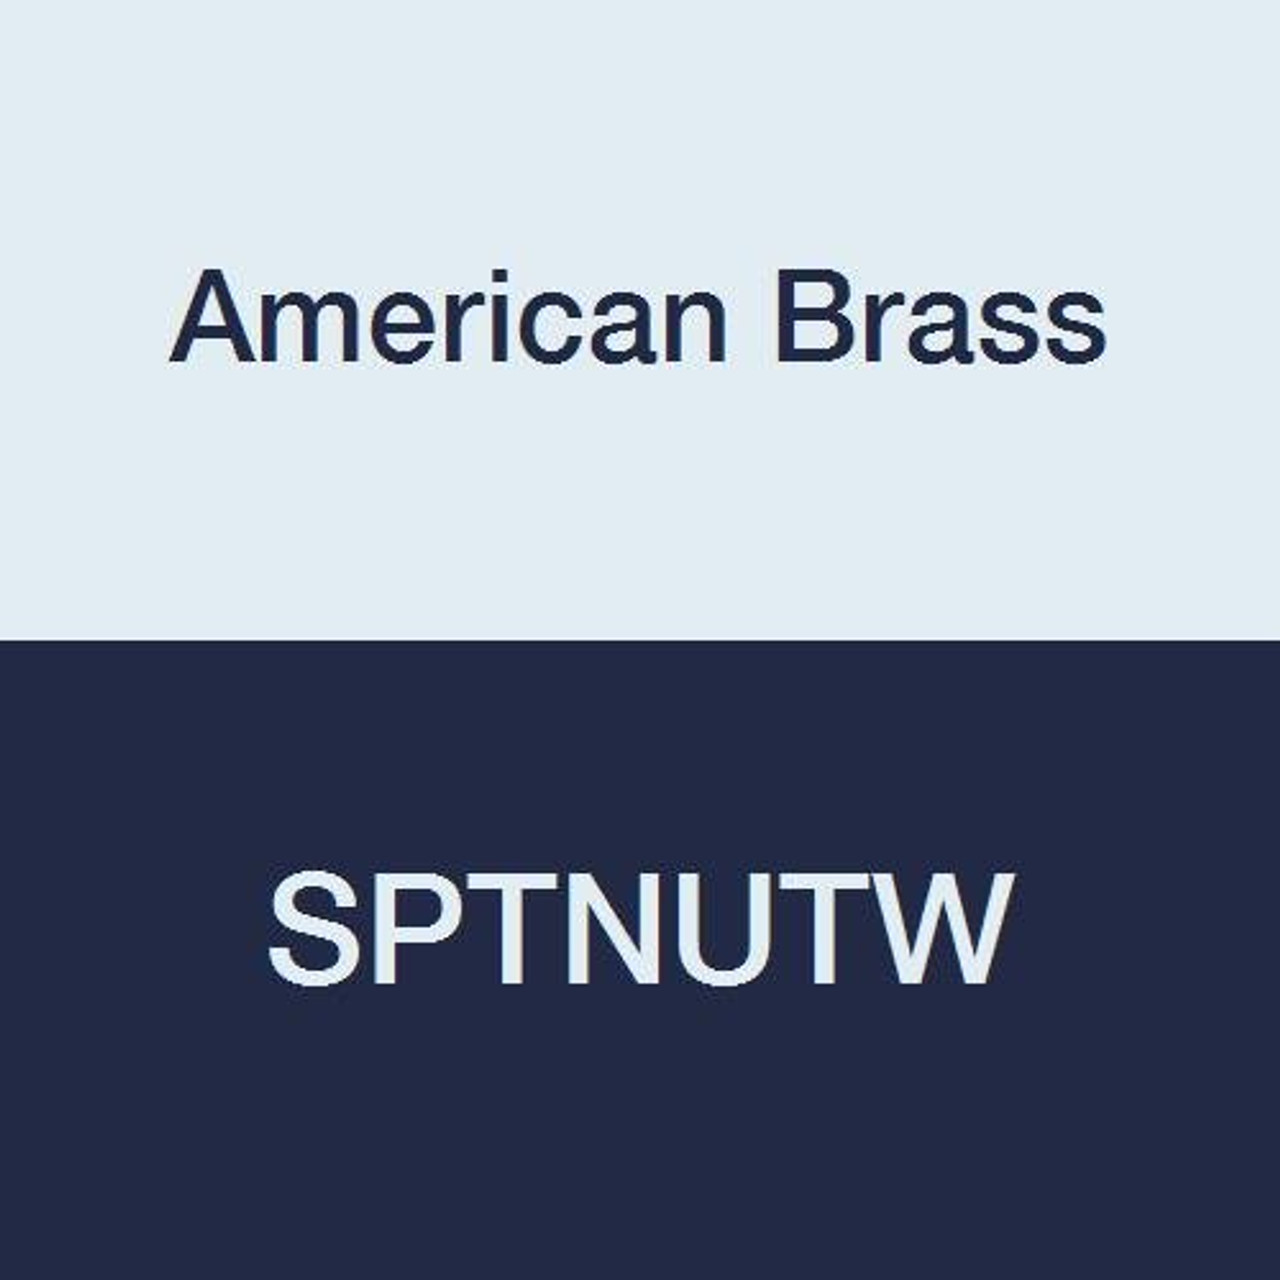 American Brass SPTNUT-W